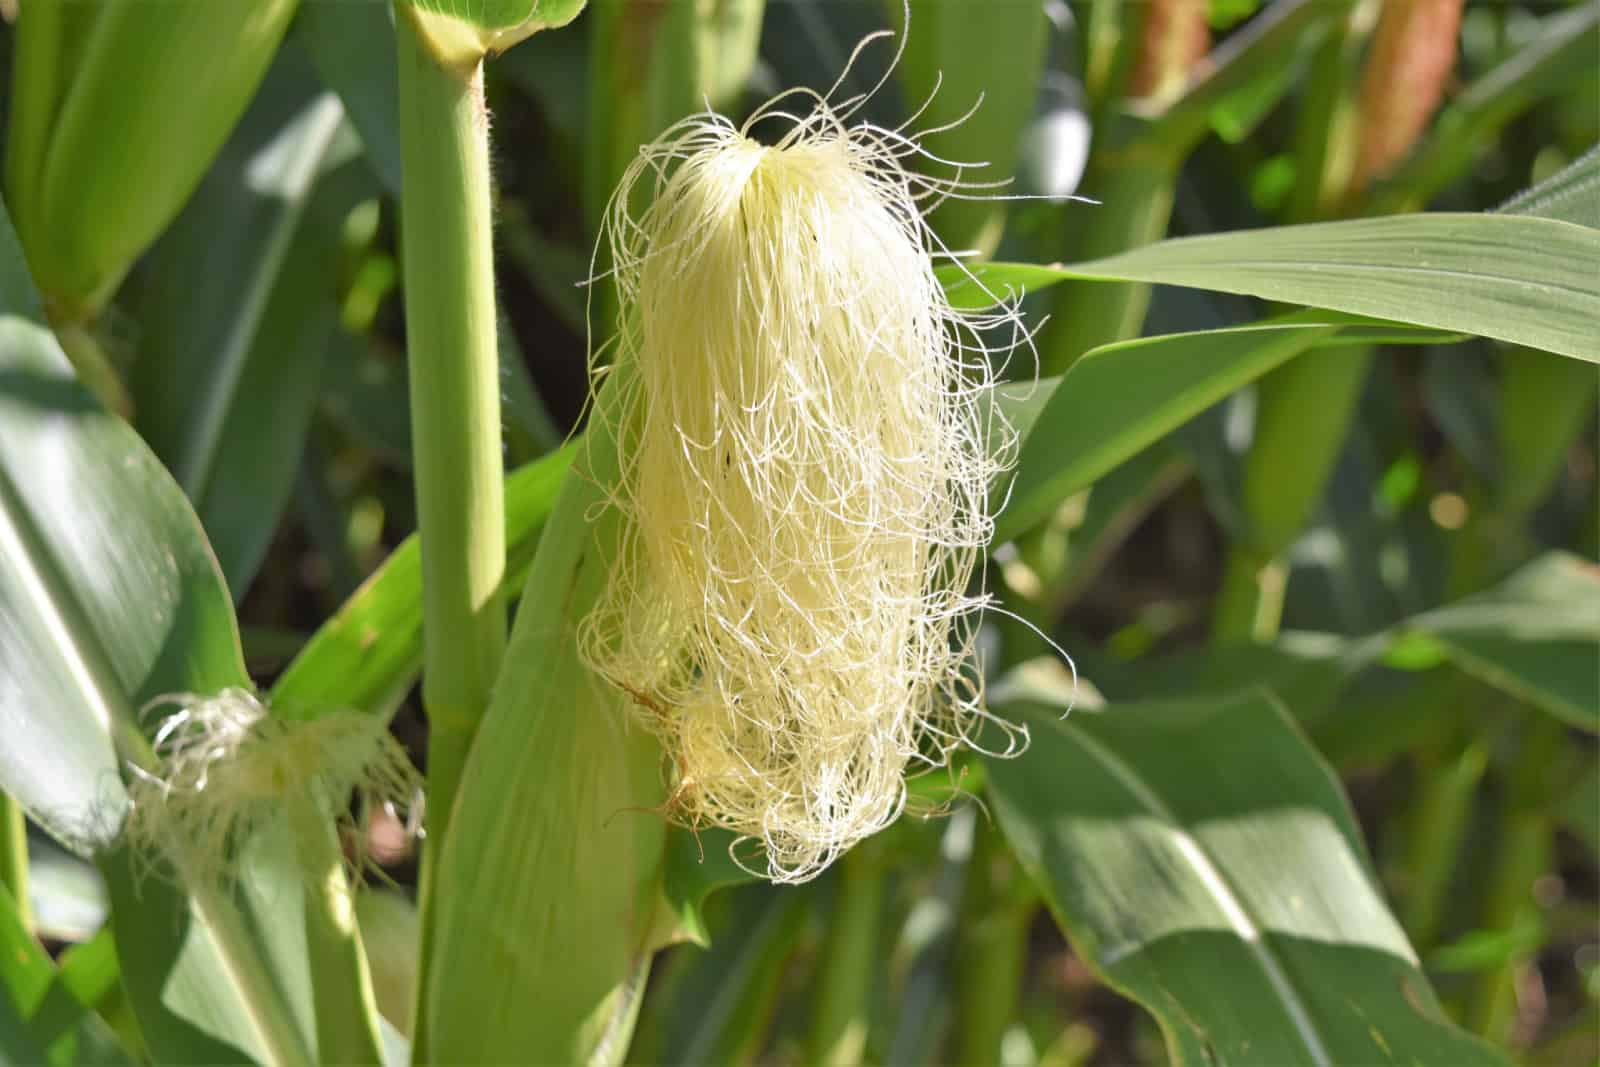 corn silk